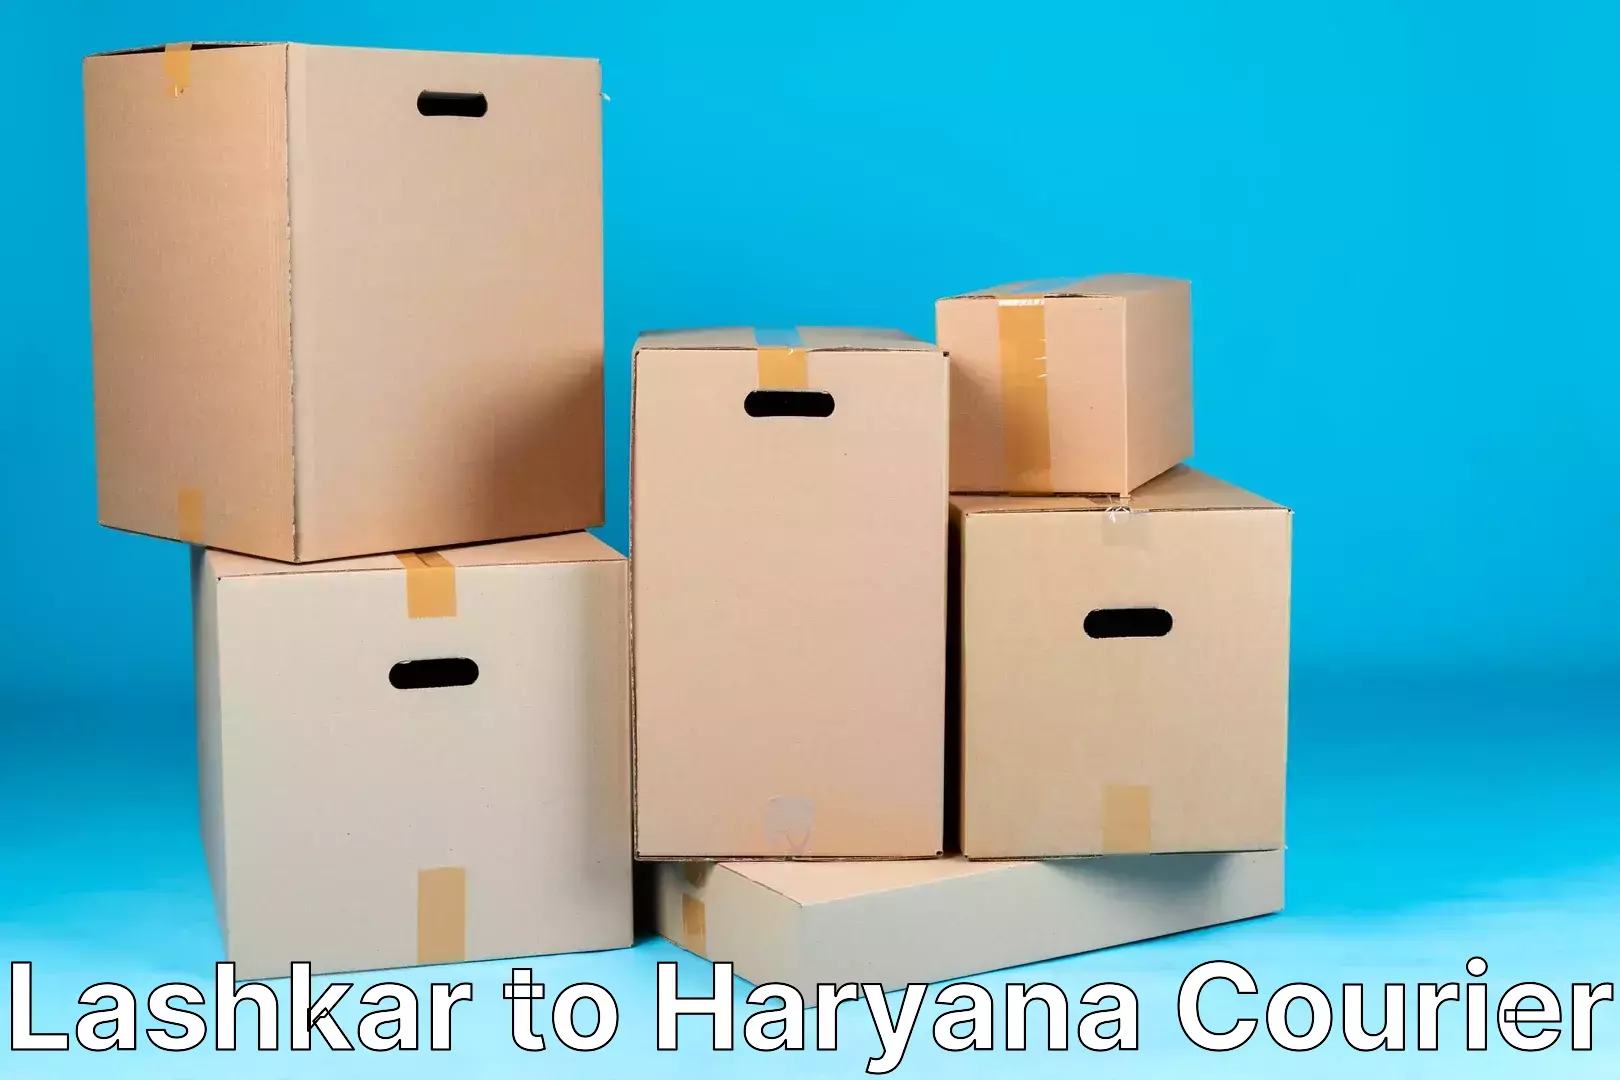 Delivery service partnership in Lashkar to Haryana